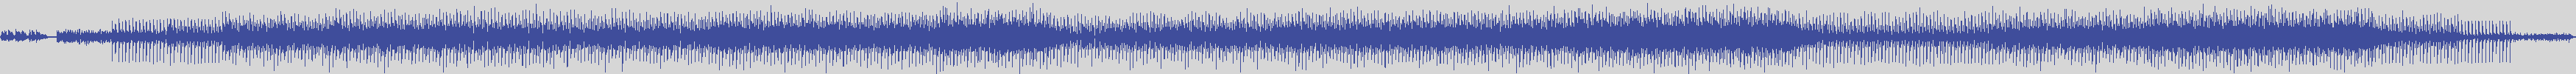 atomic_recordings [AR015] Lanotte - Love Magic [Club Magic Mix] audio wave form